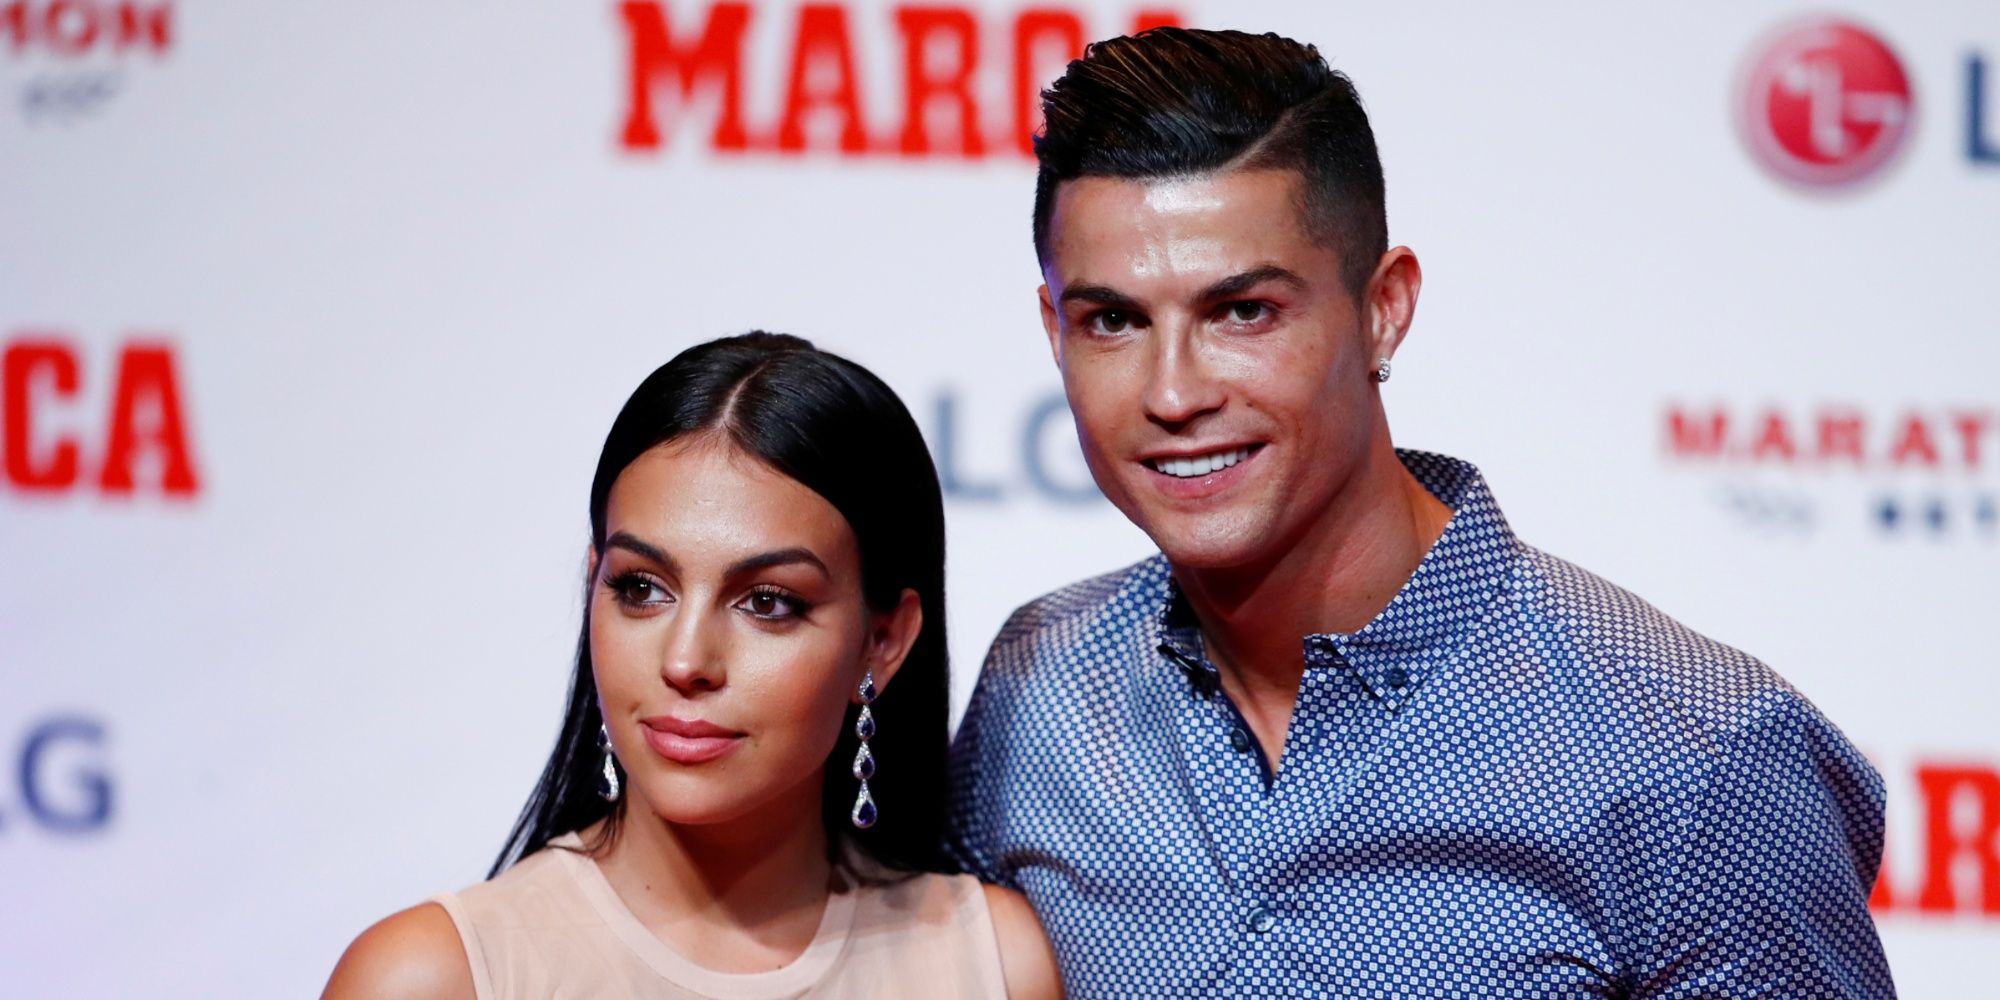 Cristiano Ronaldo poses with partner Georgina Rodriguez